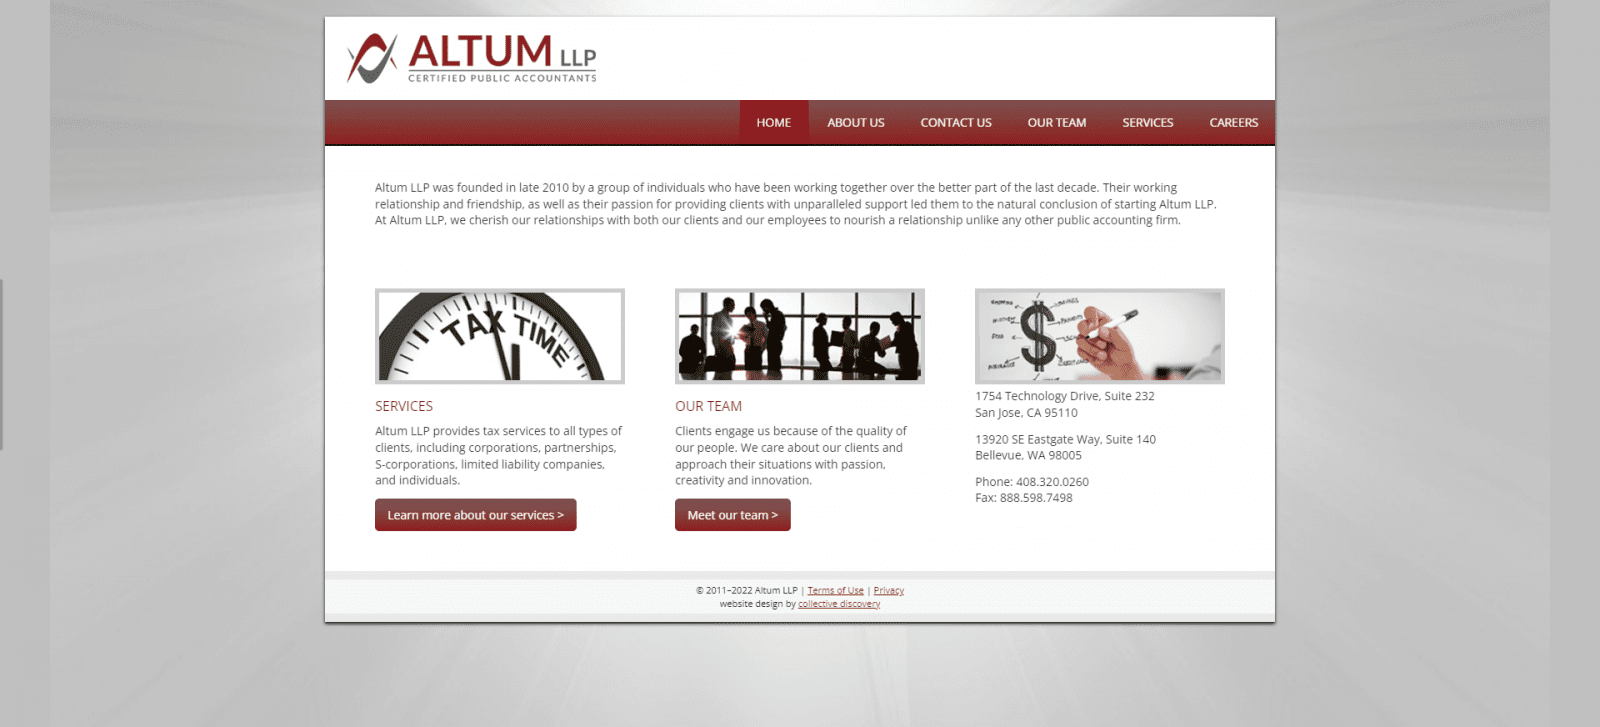 Before photos of Altum LLP website design